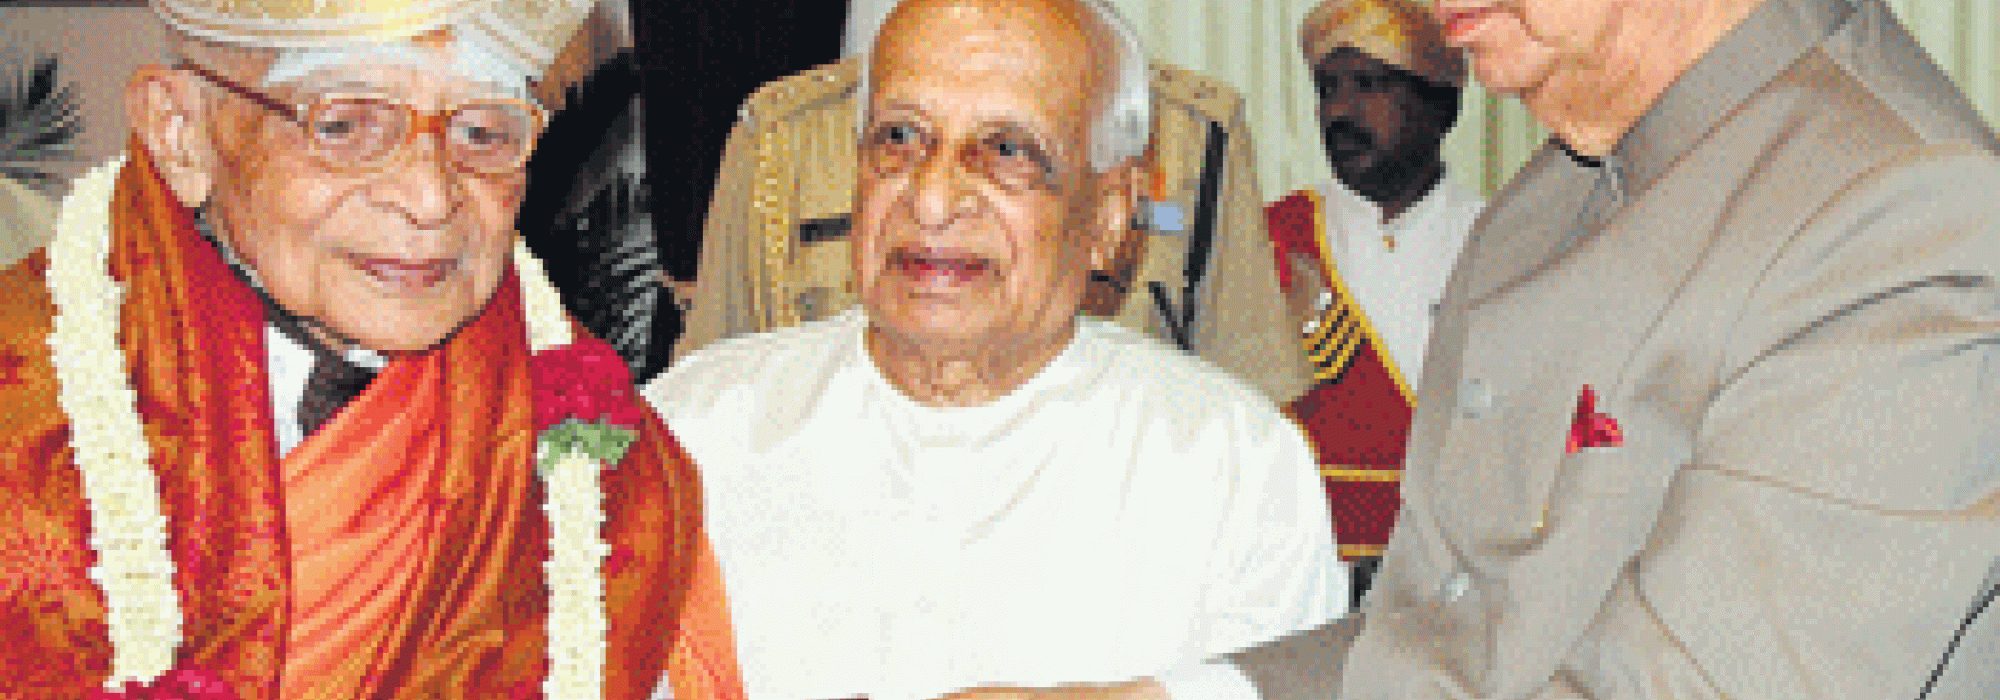 RanagathaSharma-Award